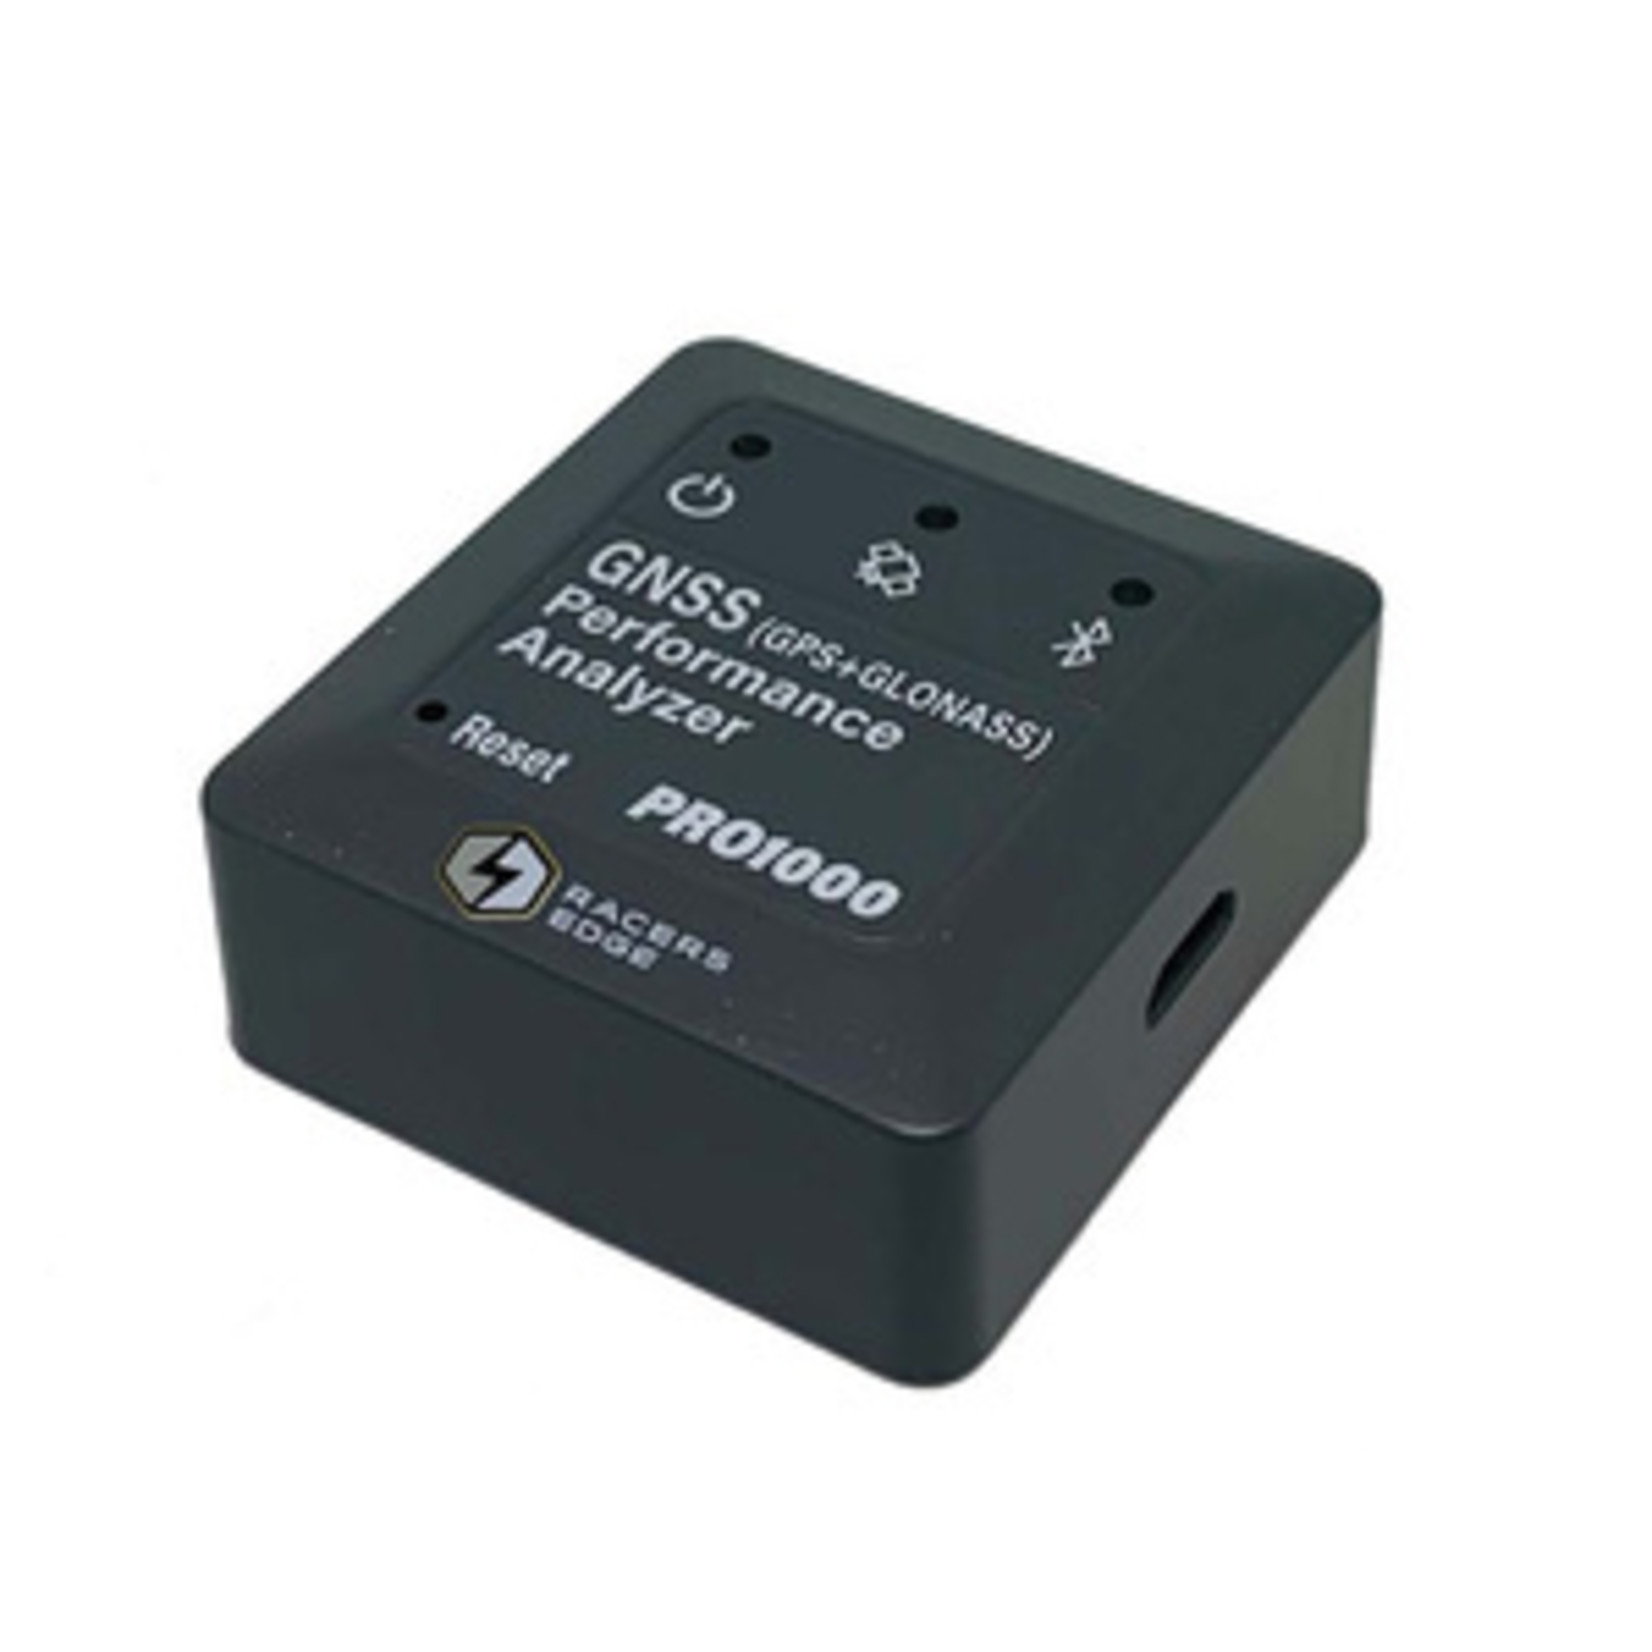 Racers Edge RCEPRO1000 GNSS Performance Analyzer Bluetooth GPS Speed Meter